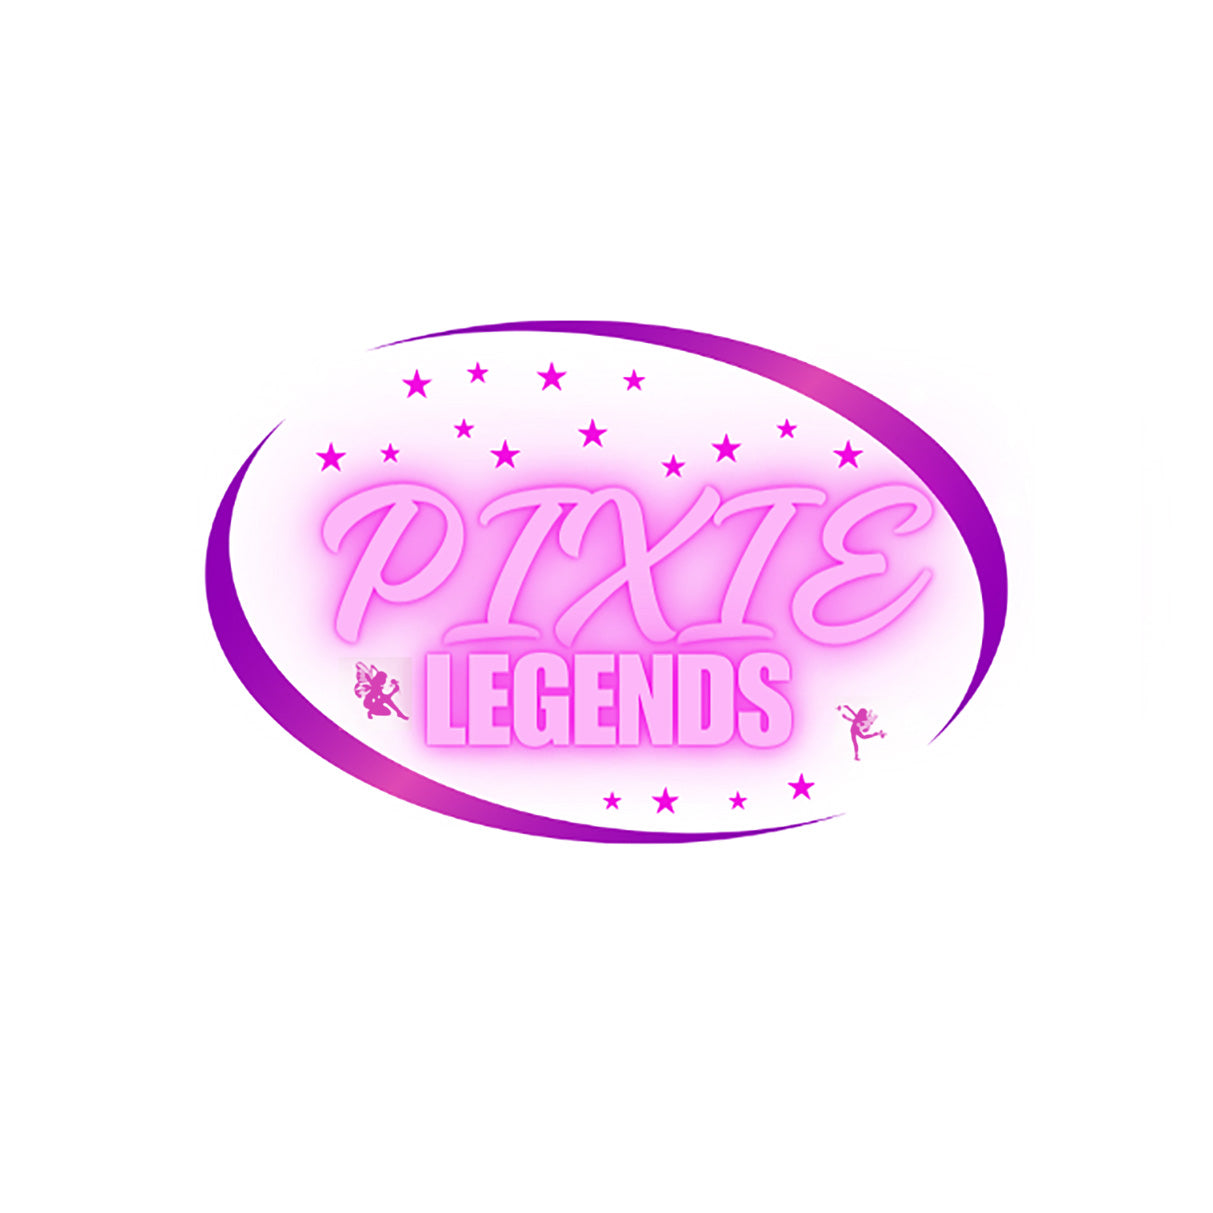 PIXIE LEGENDS Premium Booster Pack - Purple World